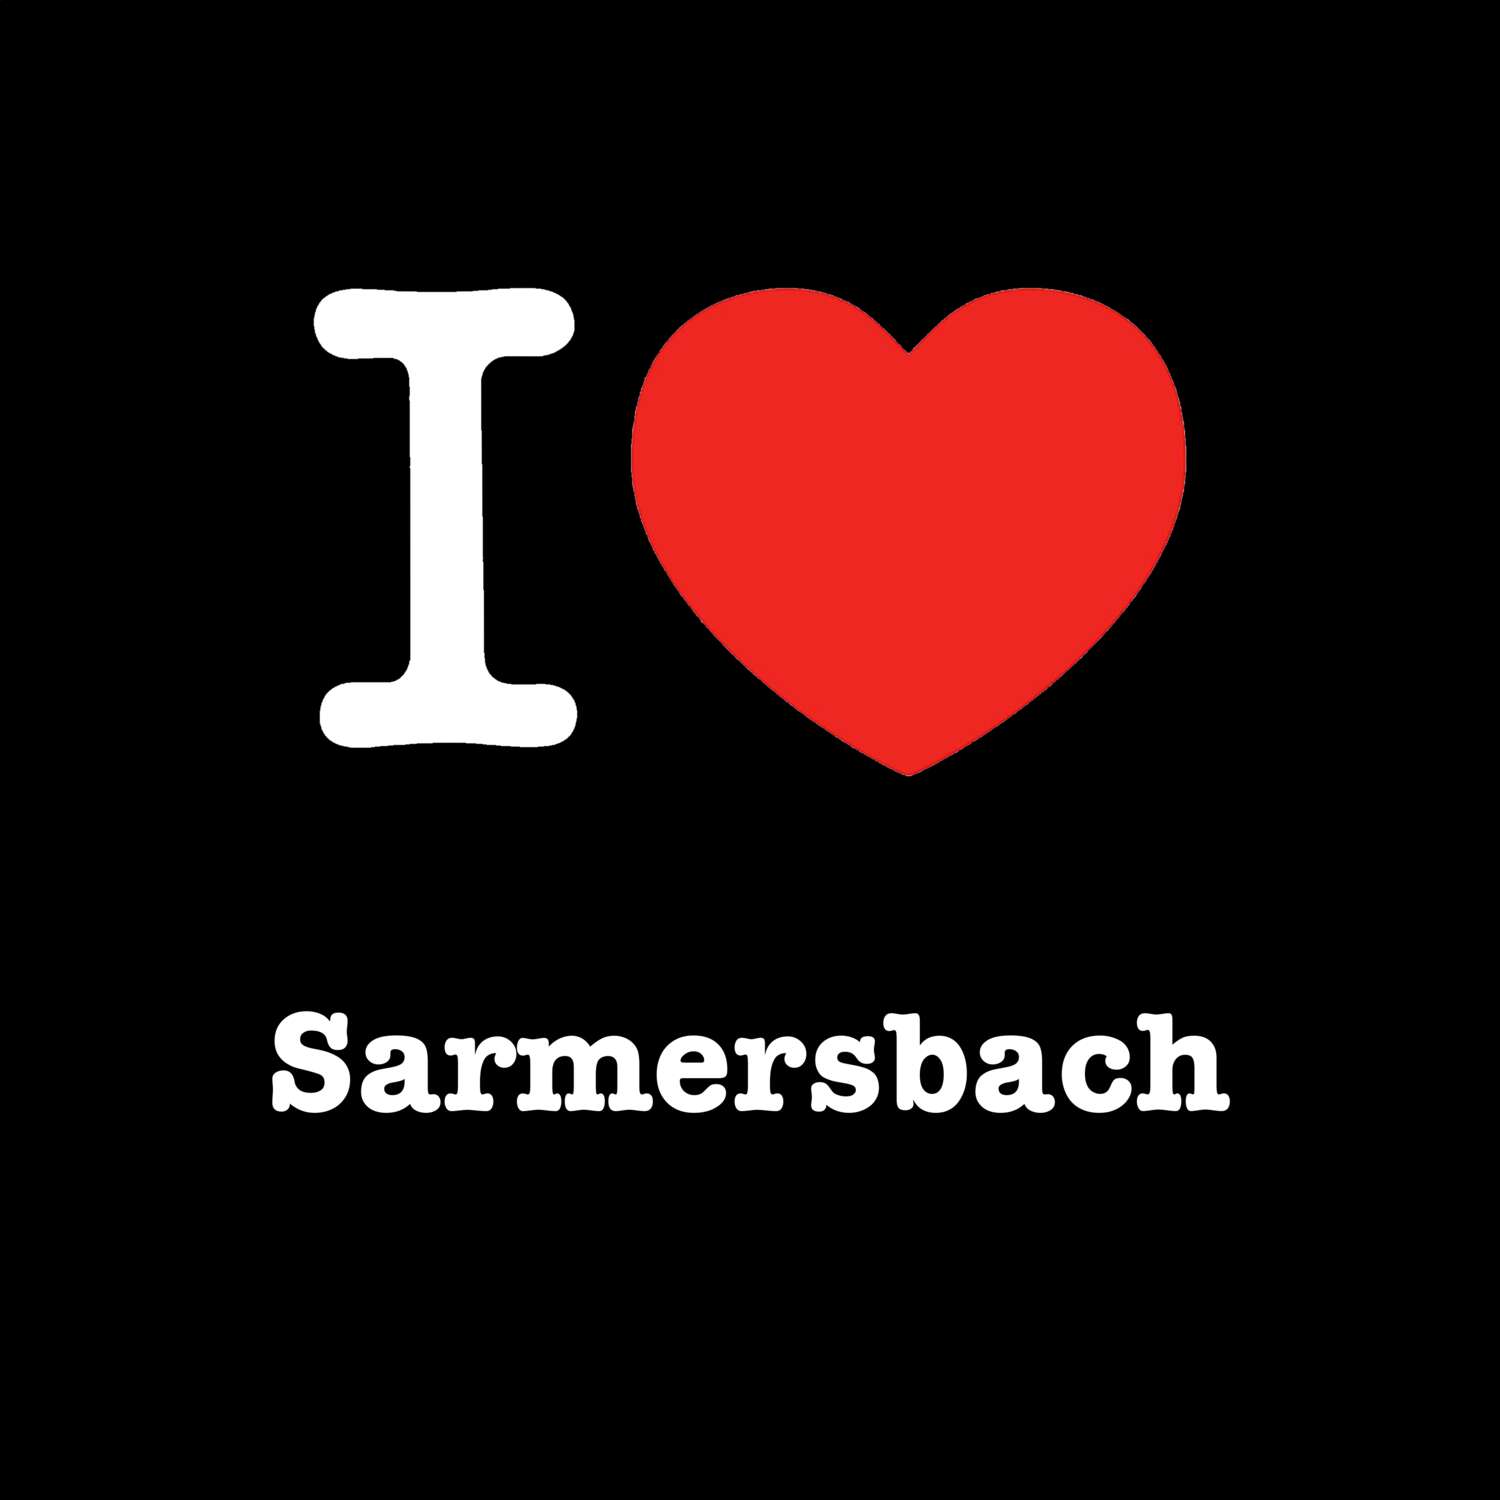 Sarmersbach T-Shirt »I love«